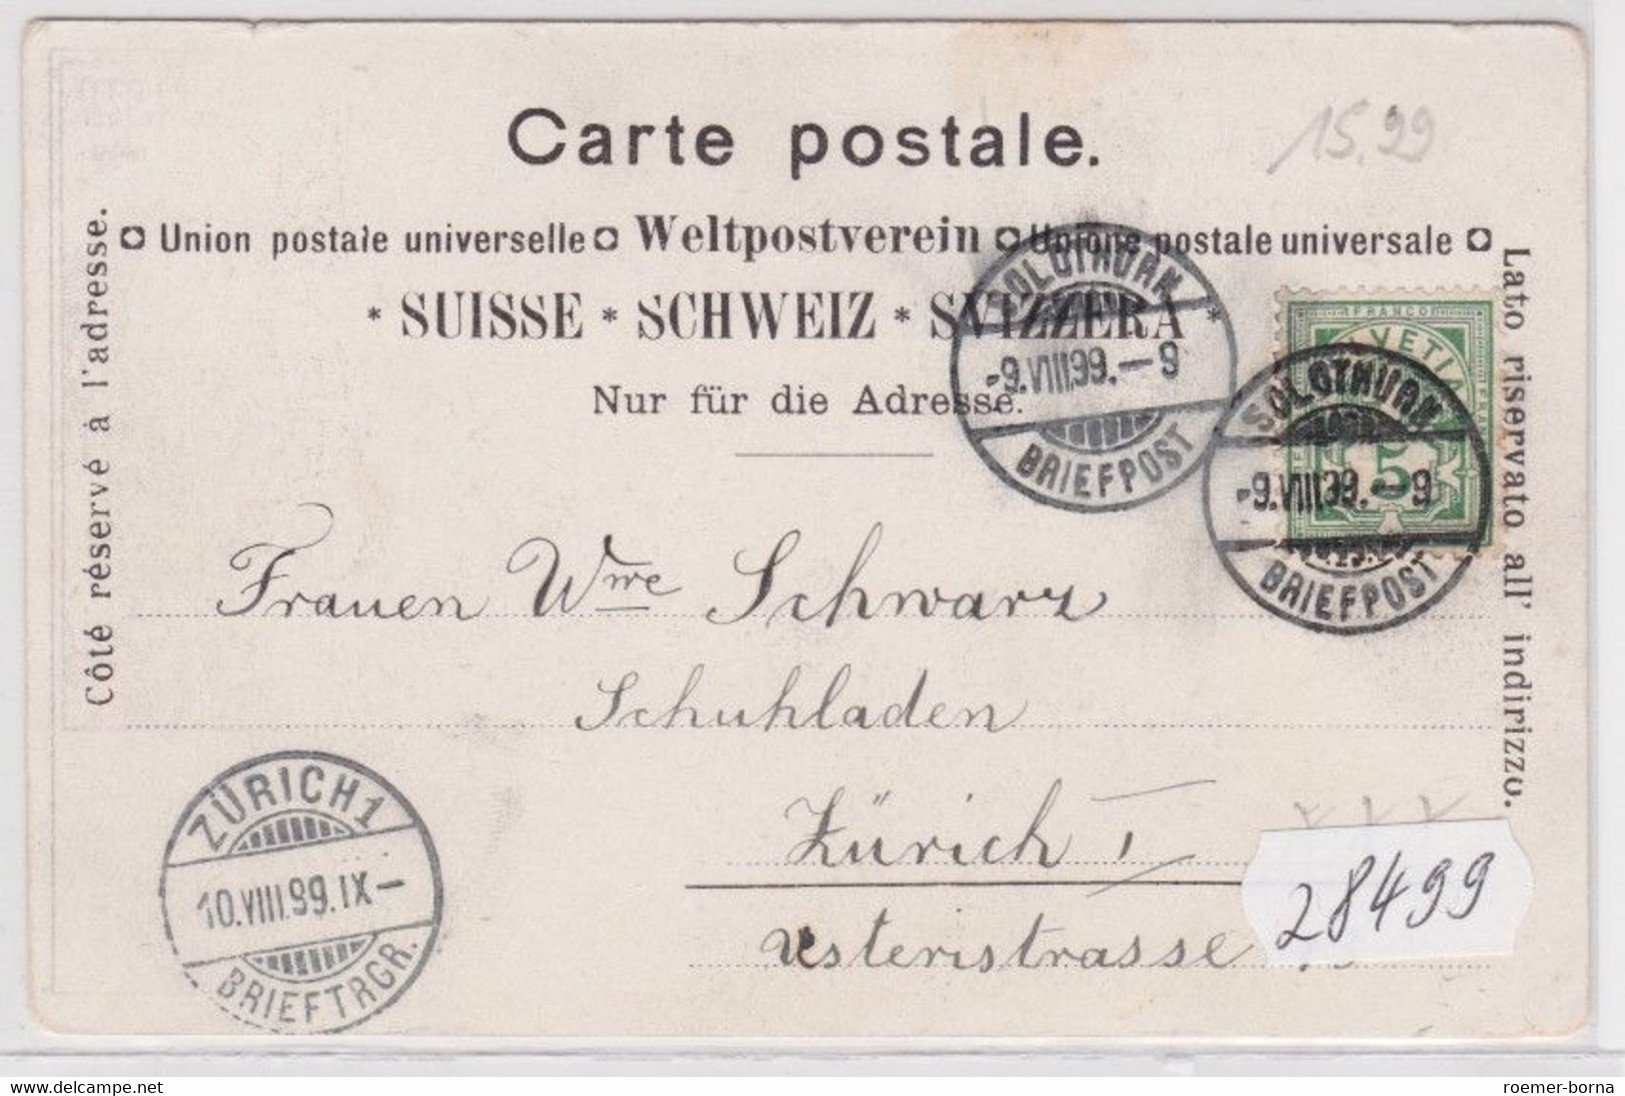 28499 Ak Solothurn Dornacher Schlachtfeier Juli 1899 - Dornach